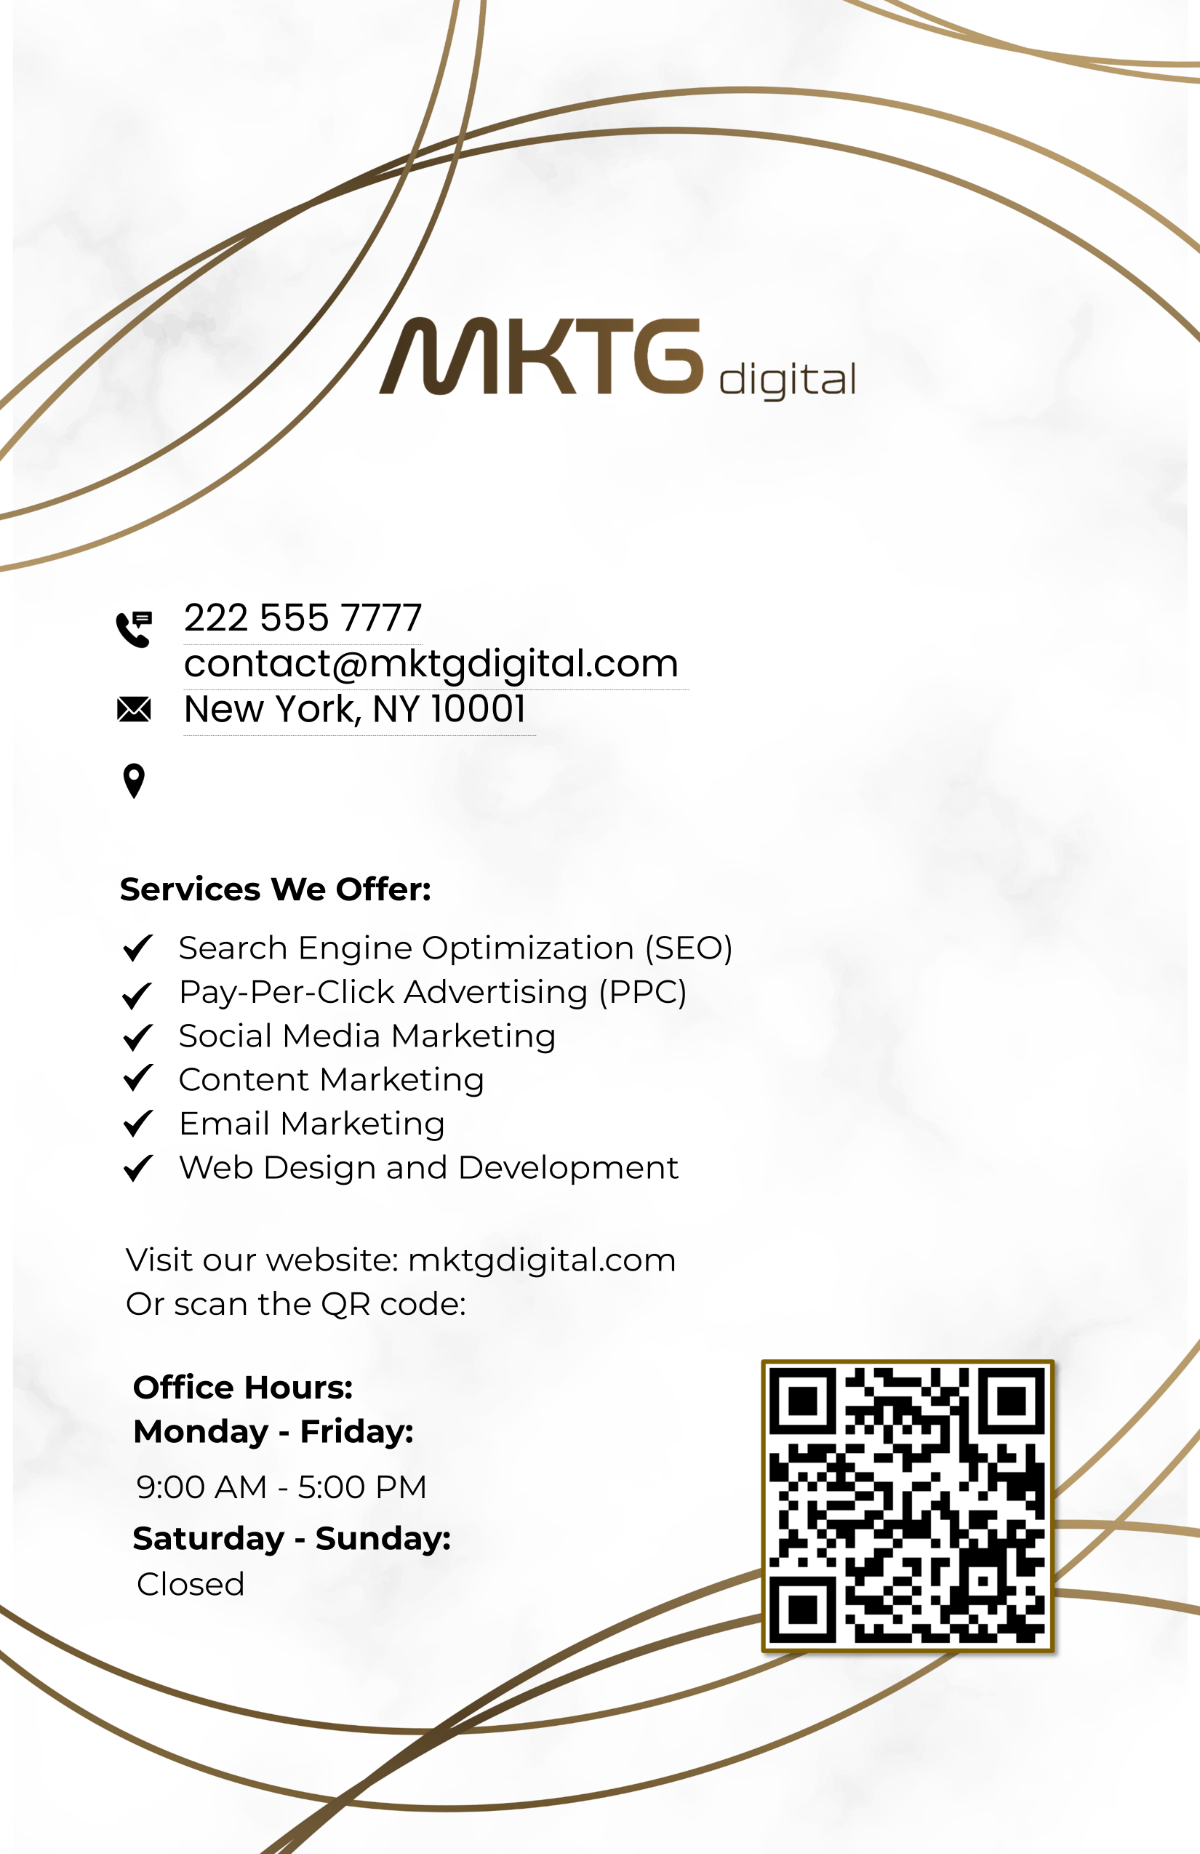 Digital Marketing Agency Reception Desk Signage